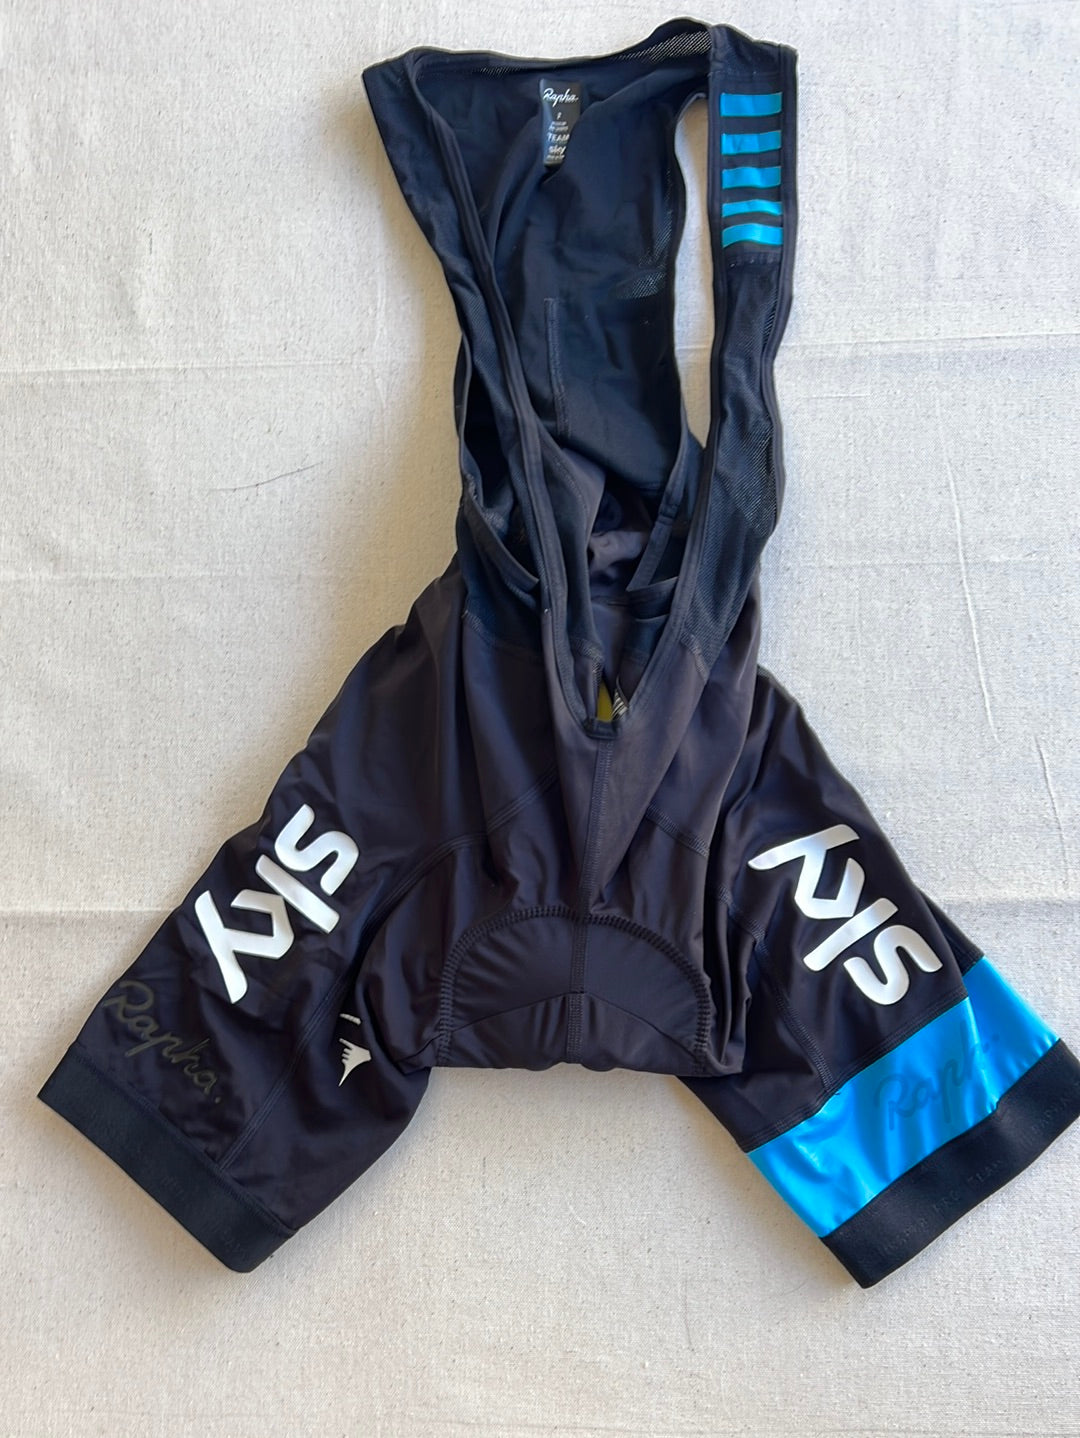 Bib Shorts Pro Team | Rapha | Team Sky | Pro Cycling Kit